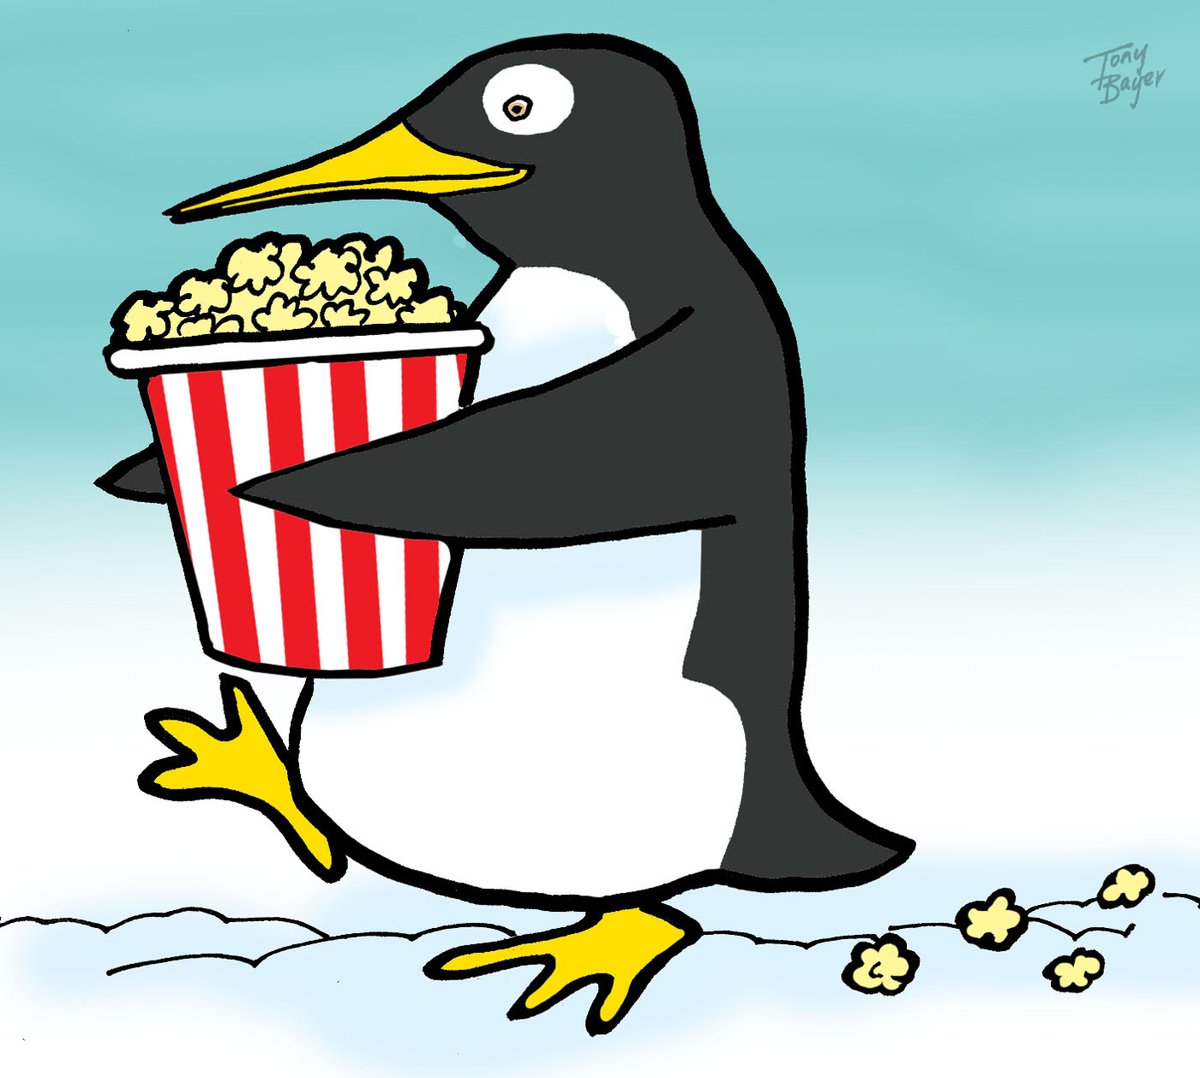 'Popcorn' for this week's @AnimalAlphabets #illustration #cartoon #art #drawing #illustration #AnimalAlphabets #ArtistOnX